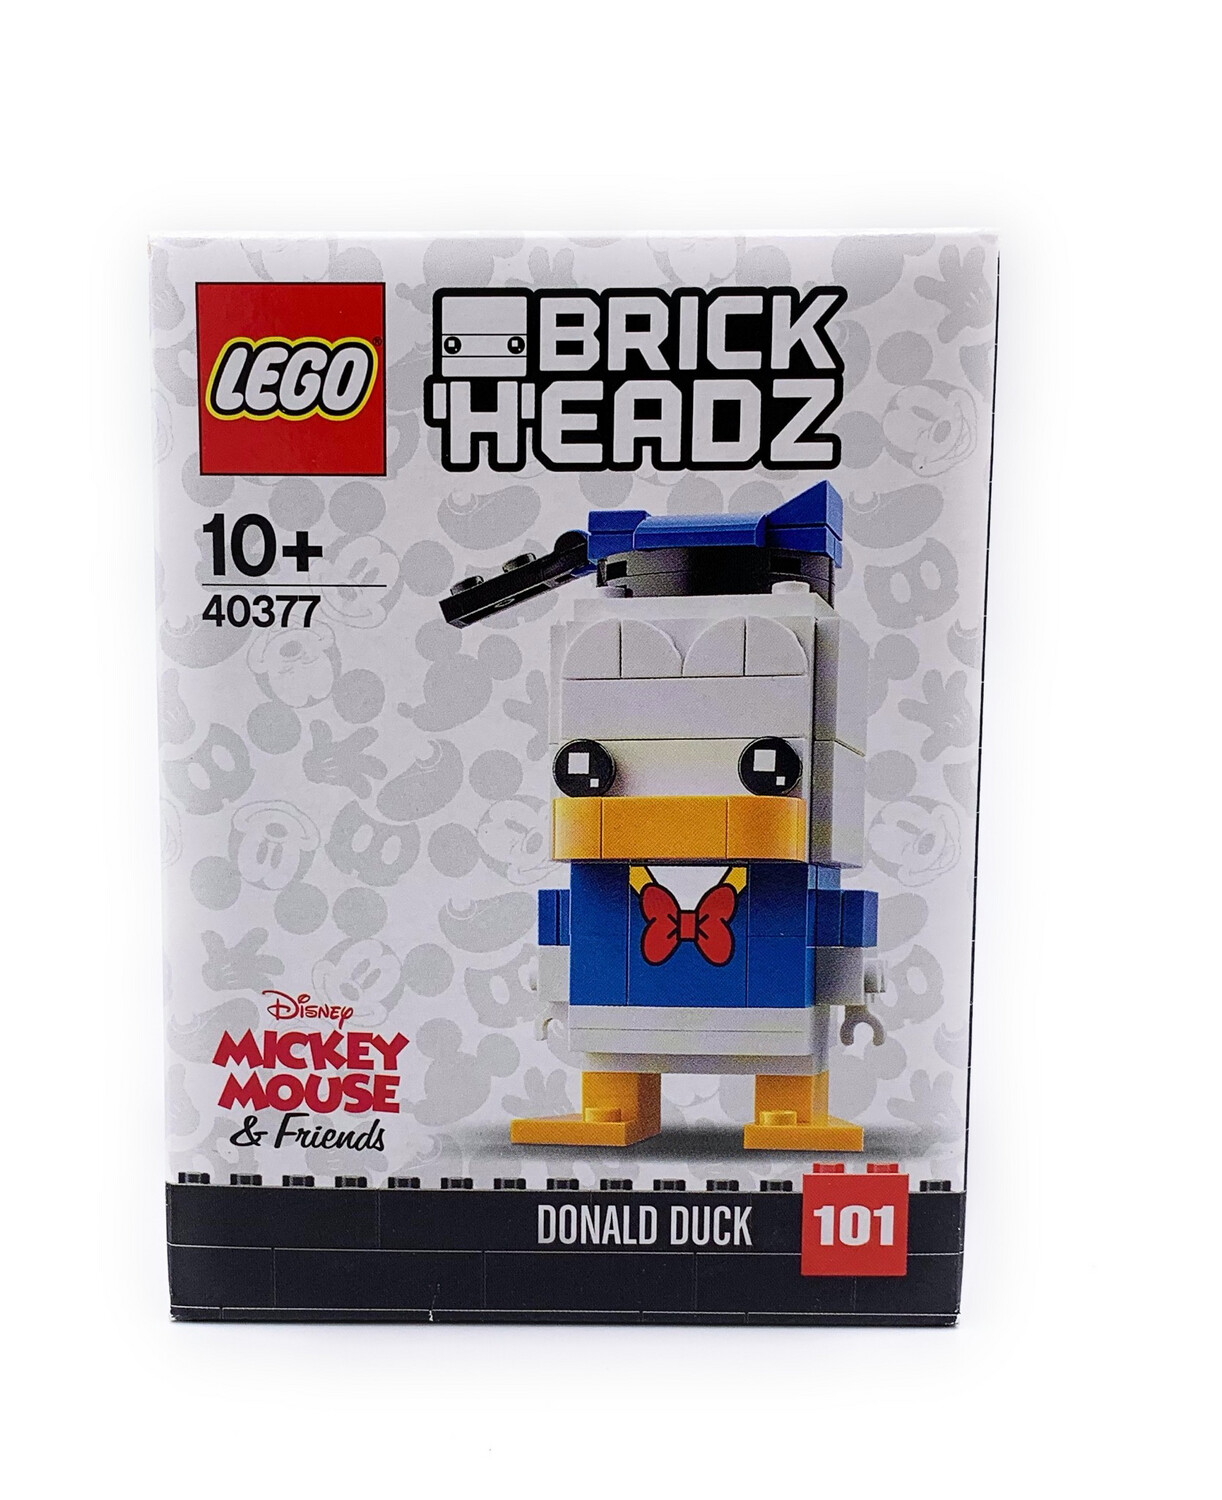 LEGO - Brick Headz Donald Duck 40377